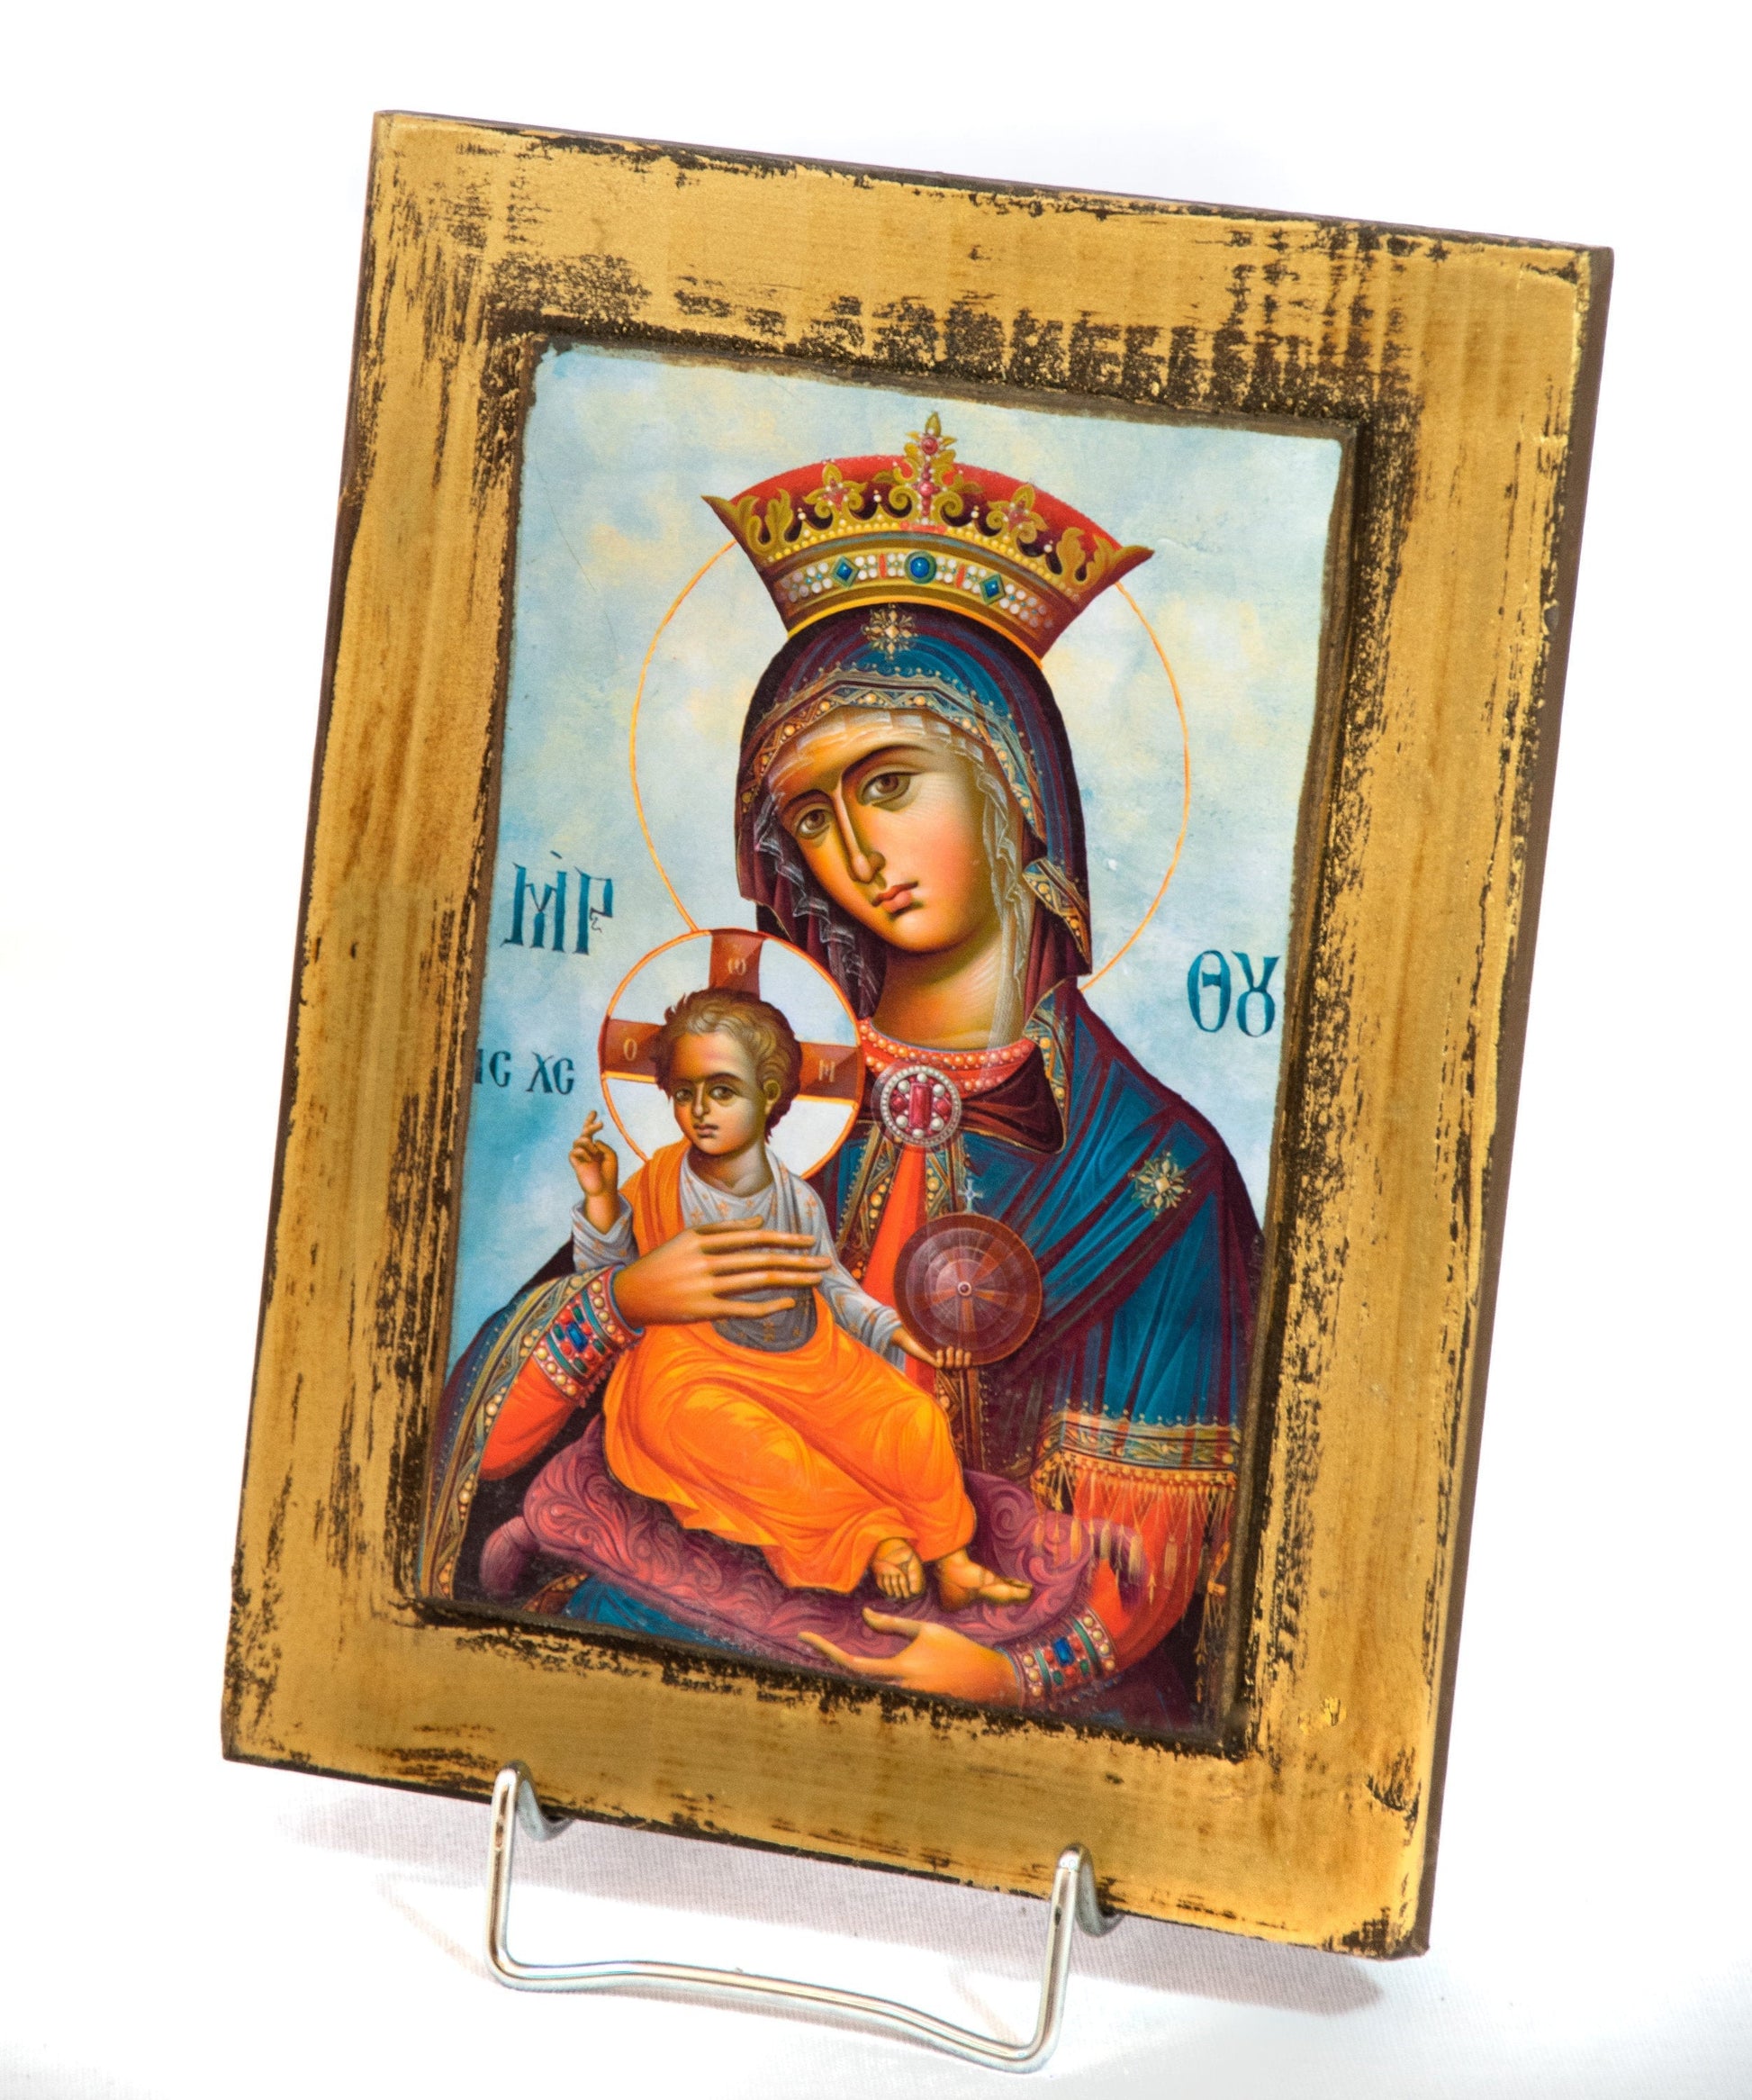 Virgin Mary icon Panagia, Handmade Greek Orthodox icon Theotokos, Mother of God Byzantine art wall hanging wood plaque, wedding gift 22x16cm TheHolyArt